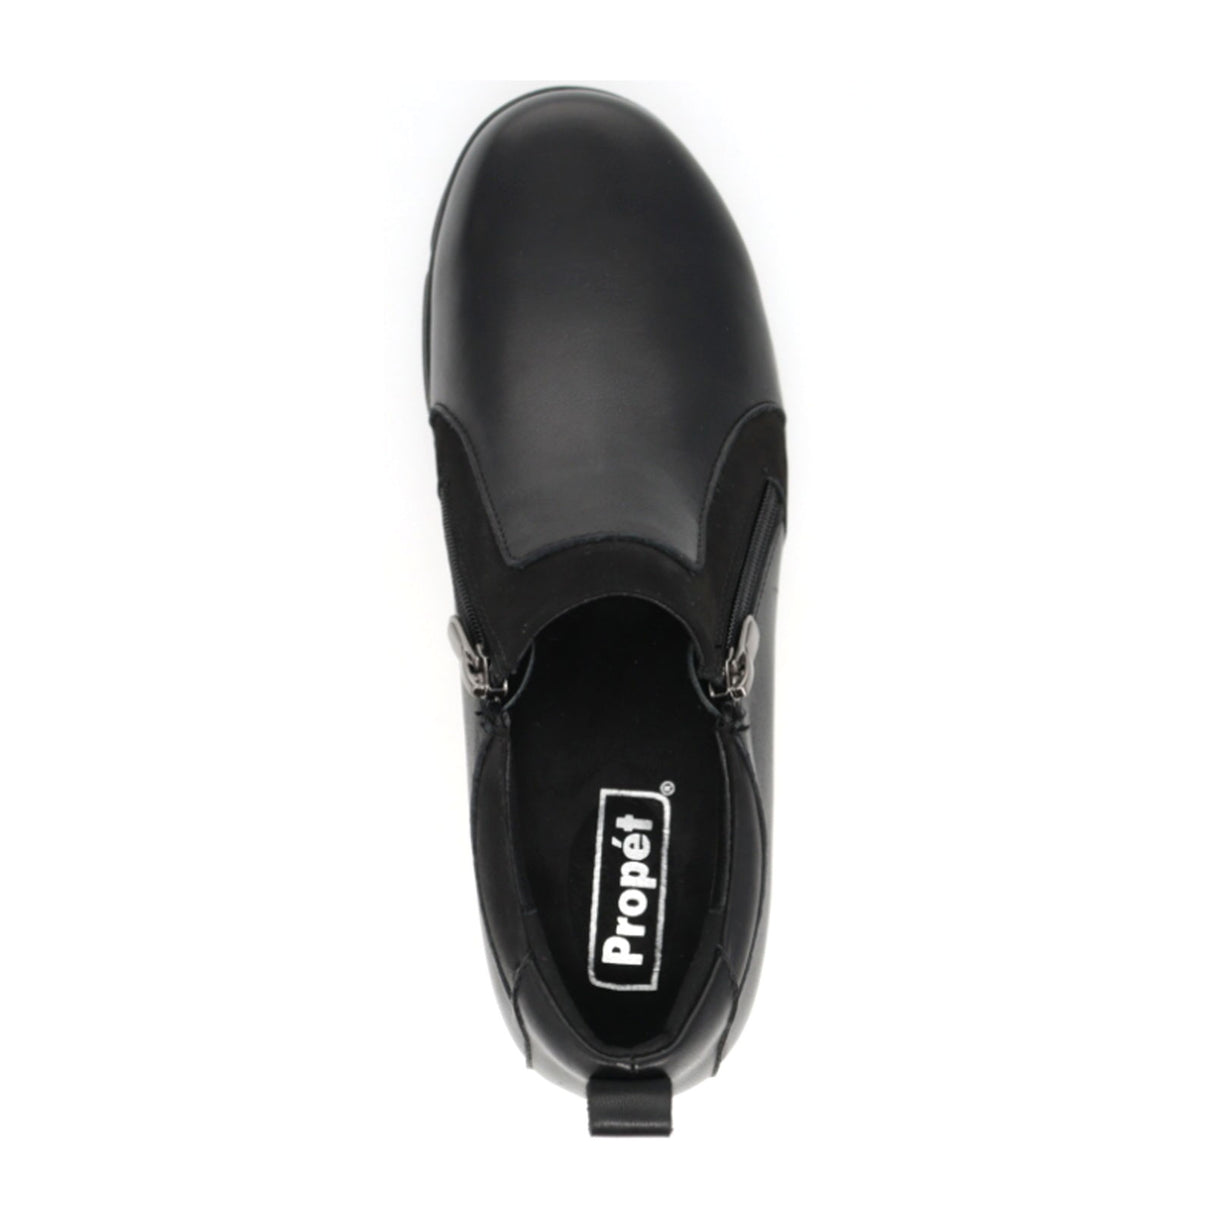 Propet Wendy (Women) - Black Dress-Casual - Slip Ons - The Heel Shoe Fitters